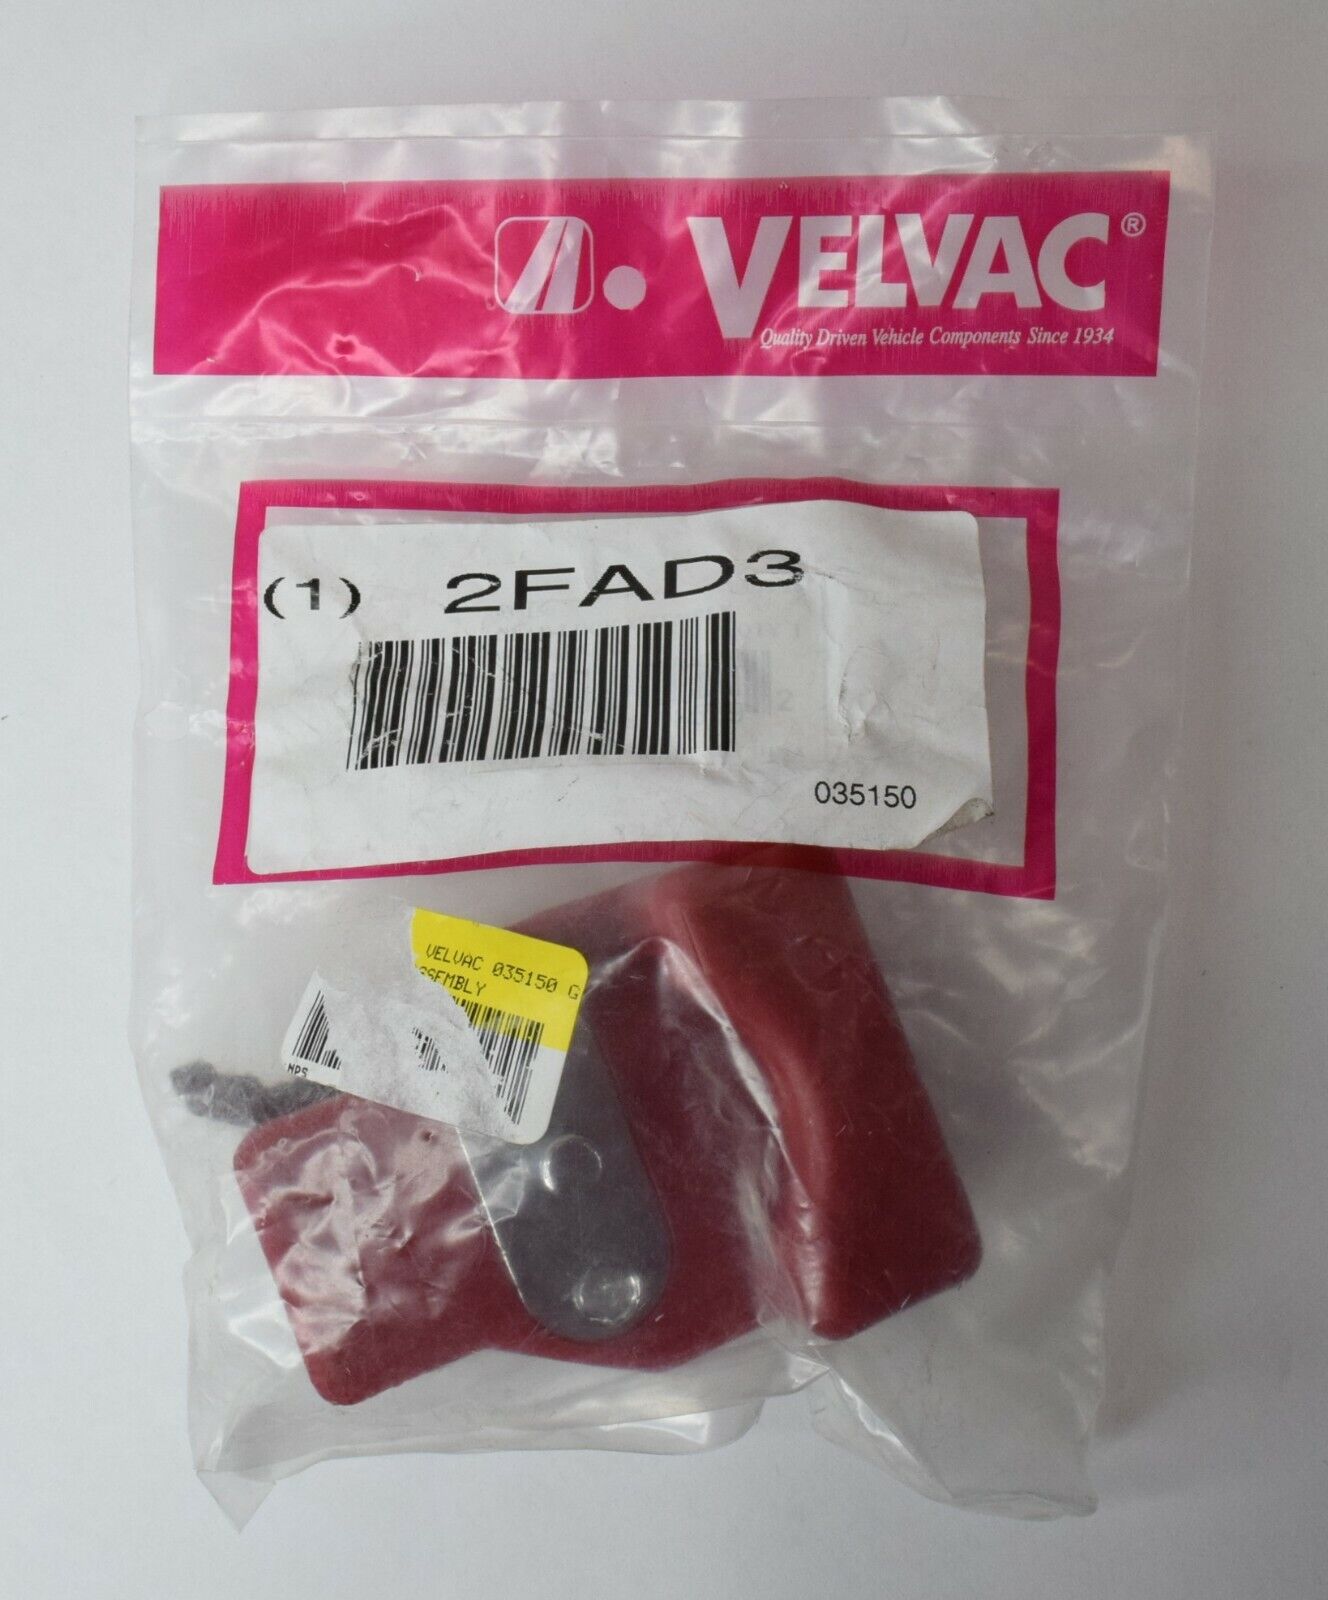 VELVAC Red Glad-Lock Assembly With 2 Keys Keyed Alike 2FAD3 